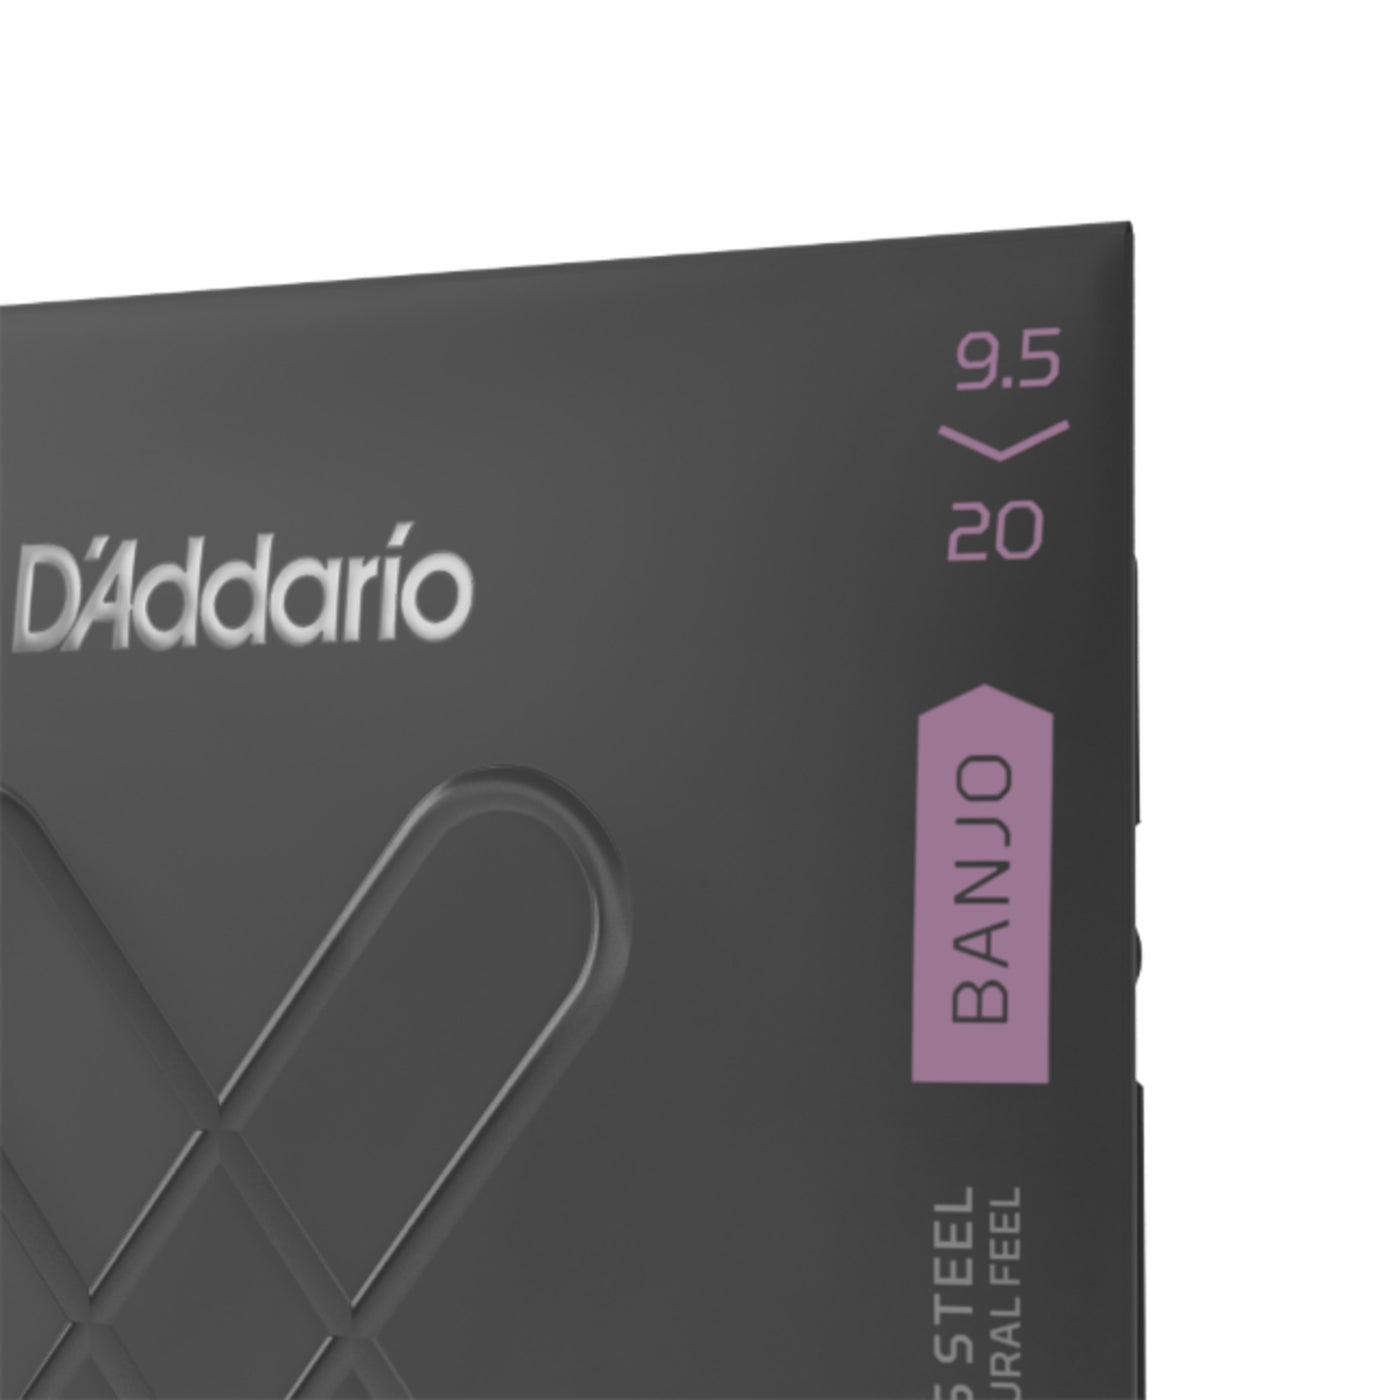 D'Addario XT Stainless Steel Banjo Strings, Custom Light, 9.5-20 (XTJ09520)